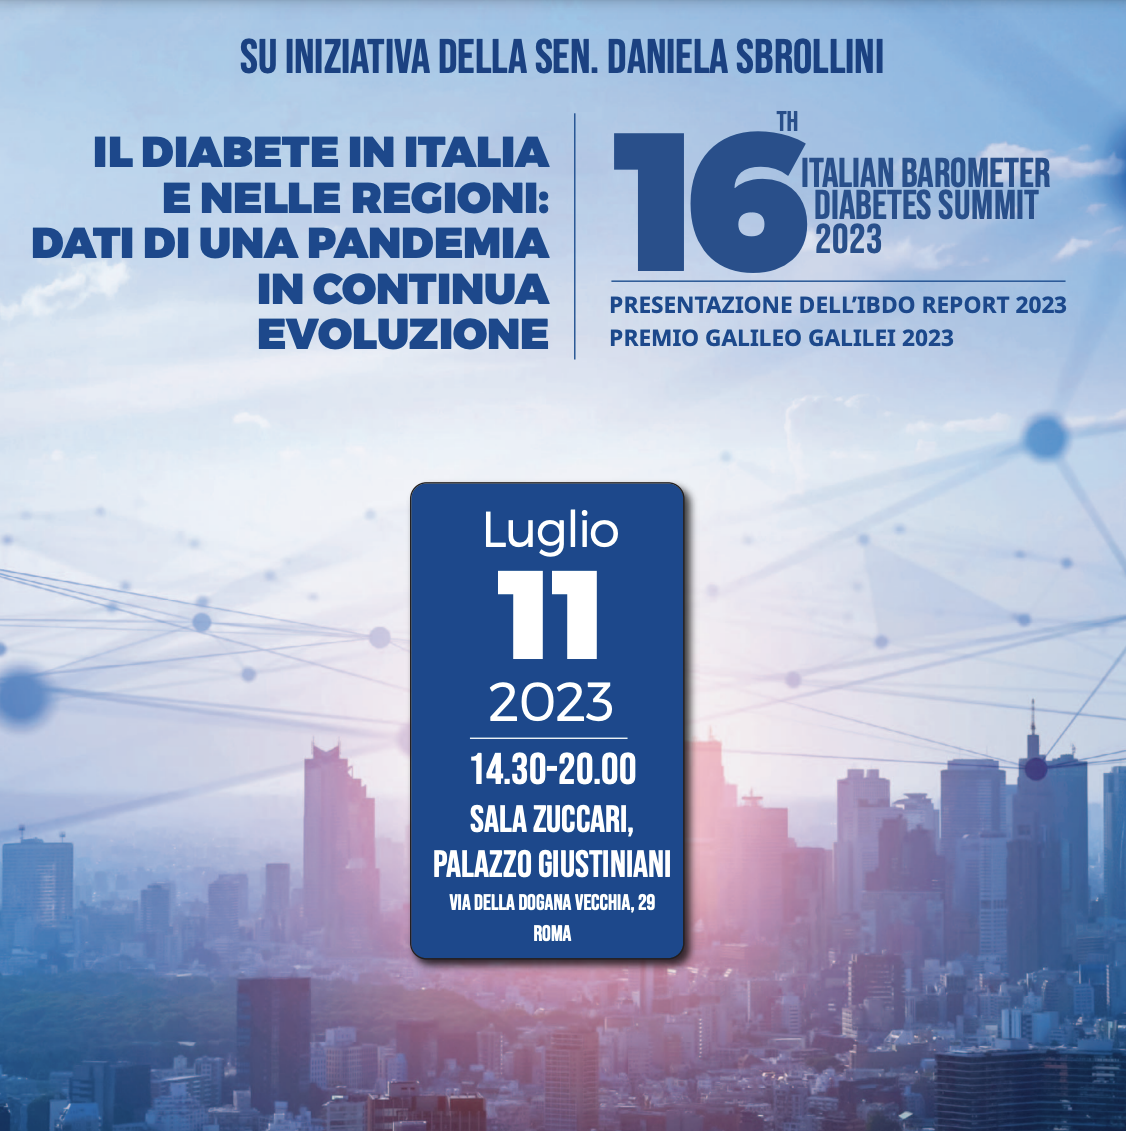 16th Italian Barometer Diabetes Summit 2023